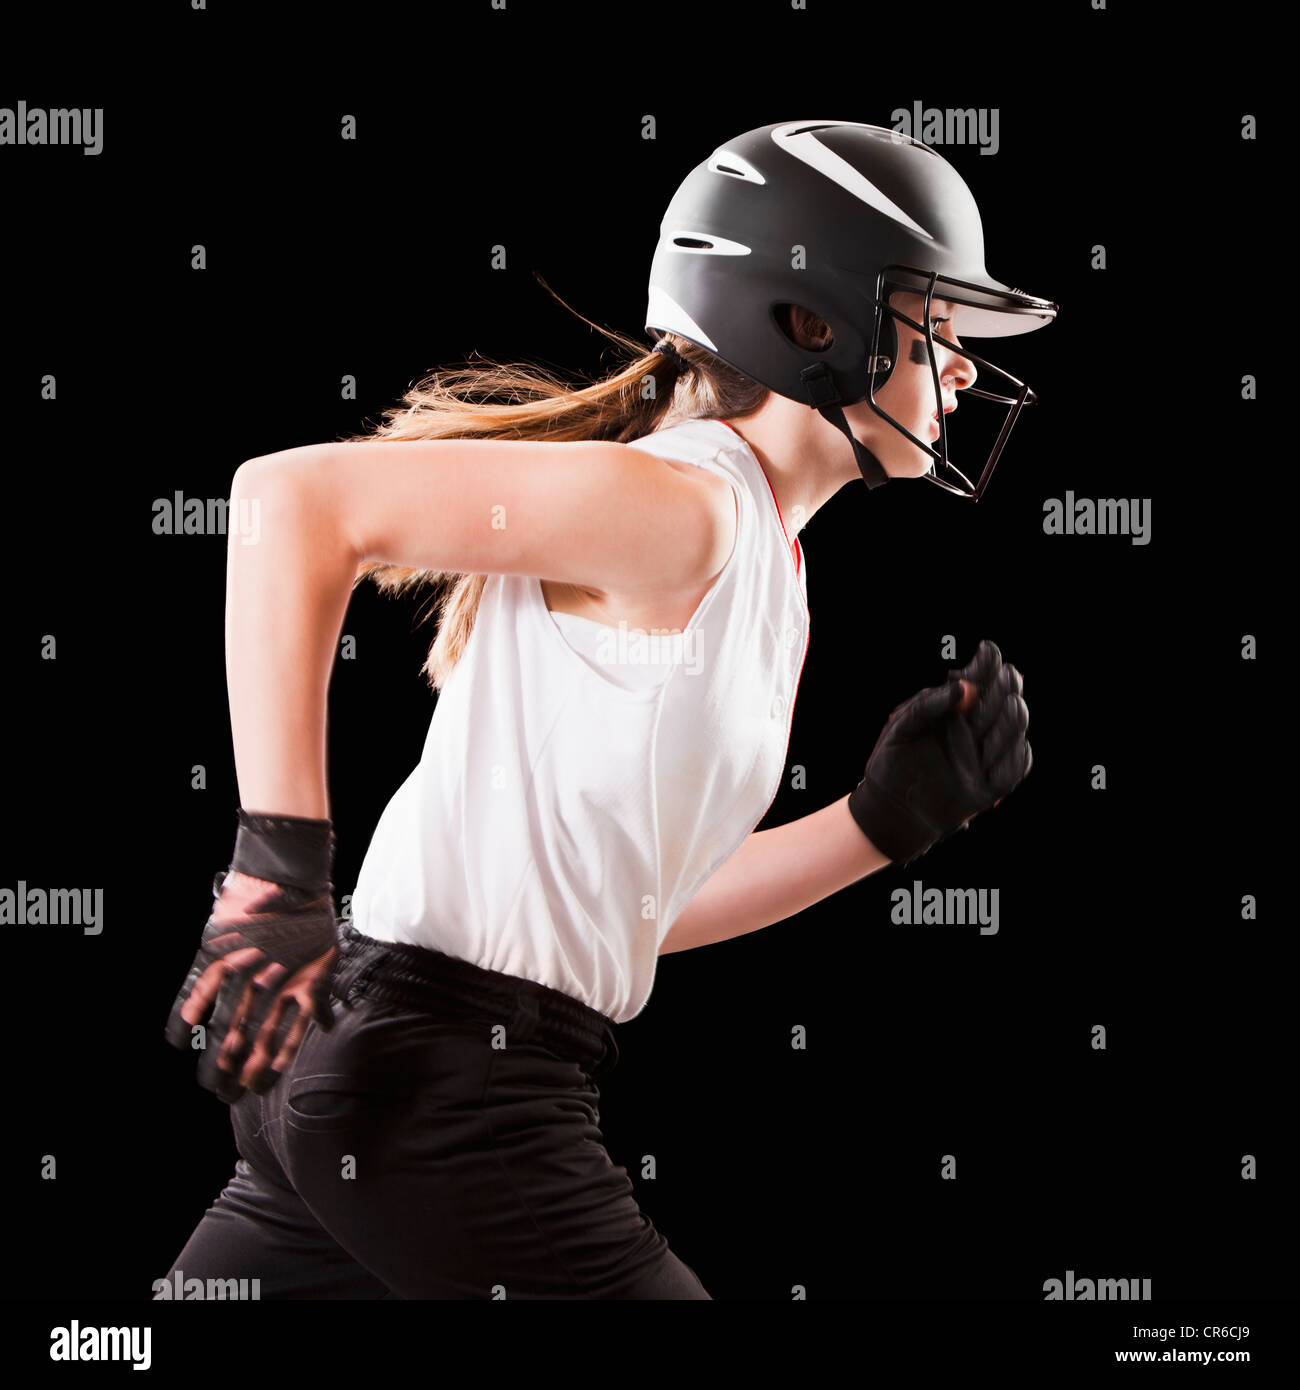 Portrait of girl (12-13) plying softball Stock Photo